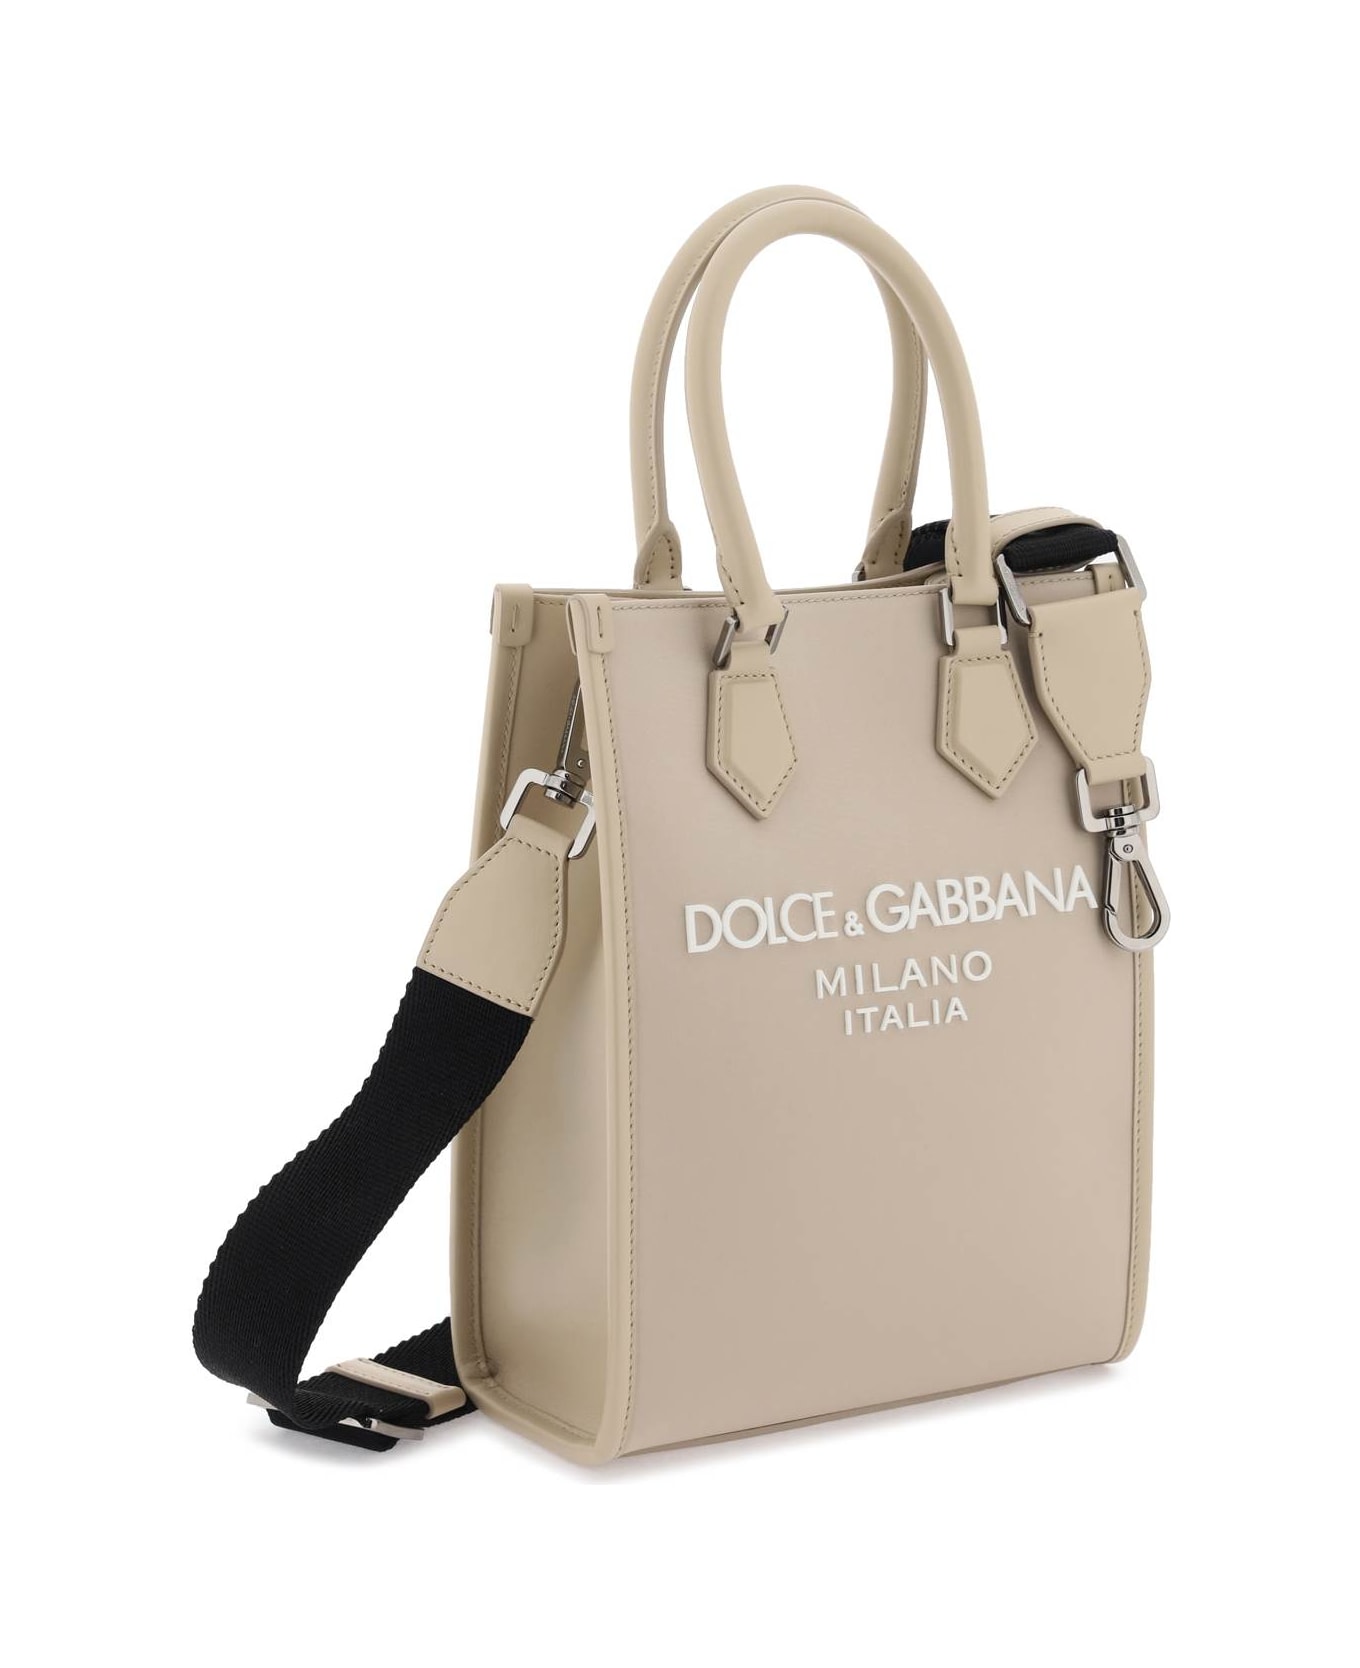 Dolce & Gabbana Small Nylon Tote Bag - Deserto/beige